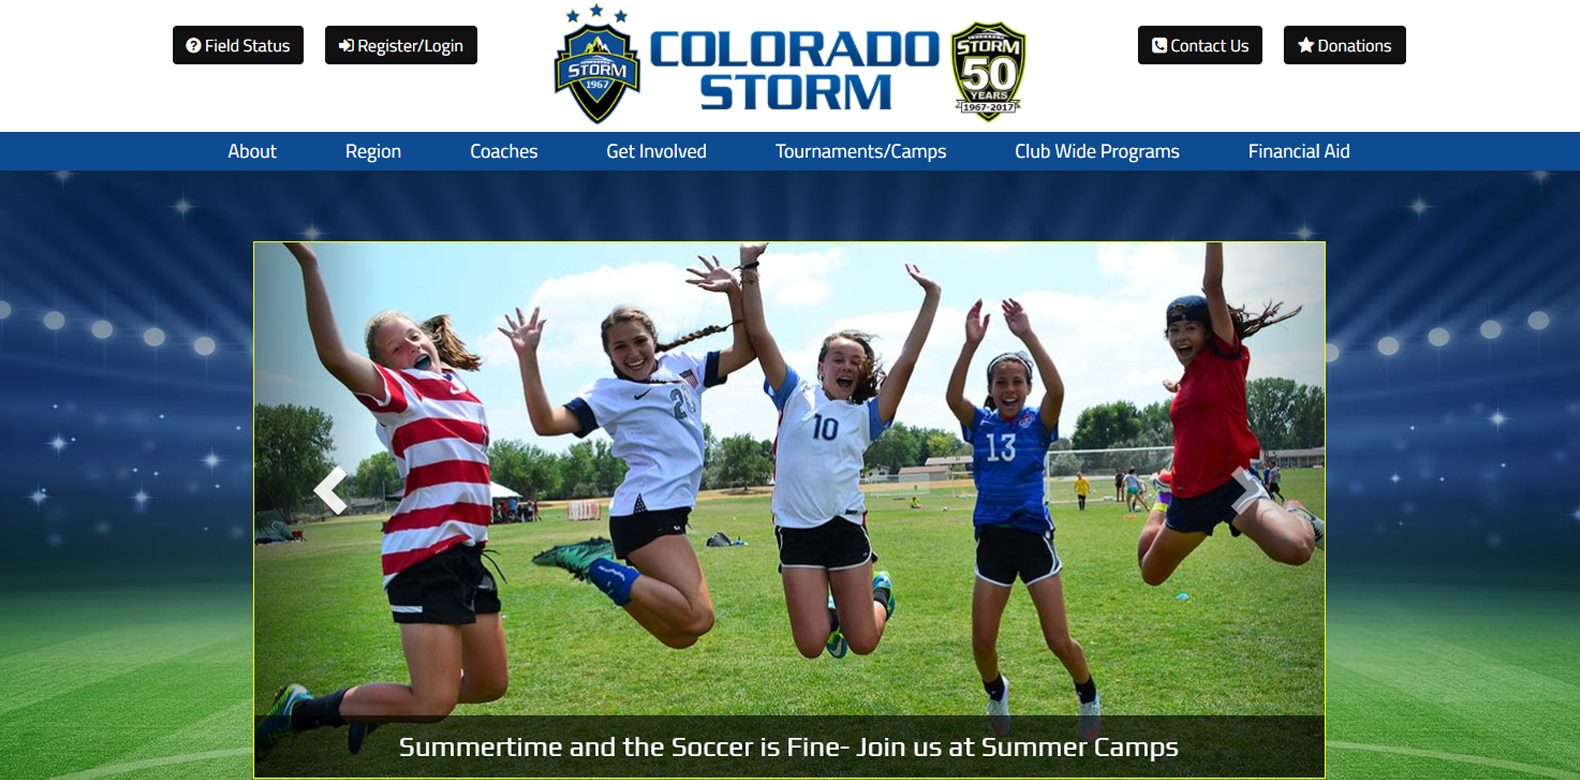 
New Website Launch: Colorado Storm